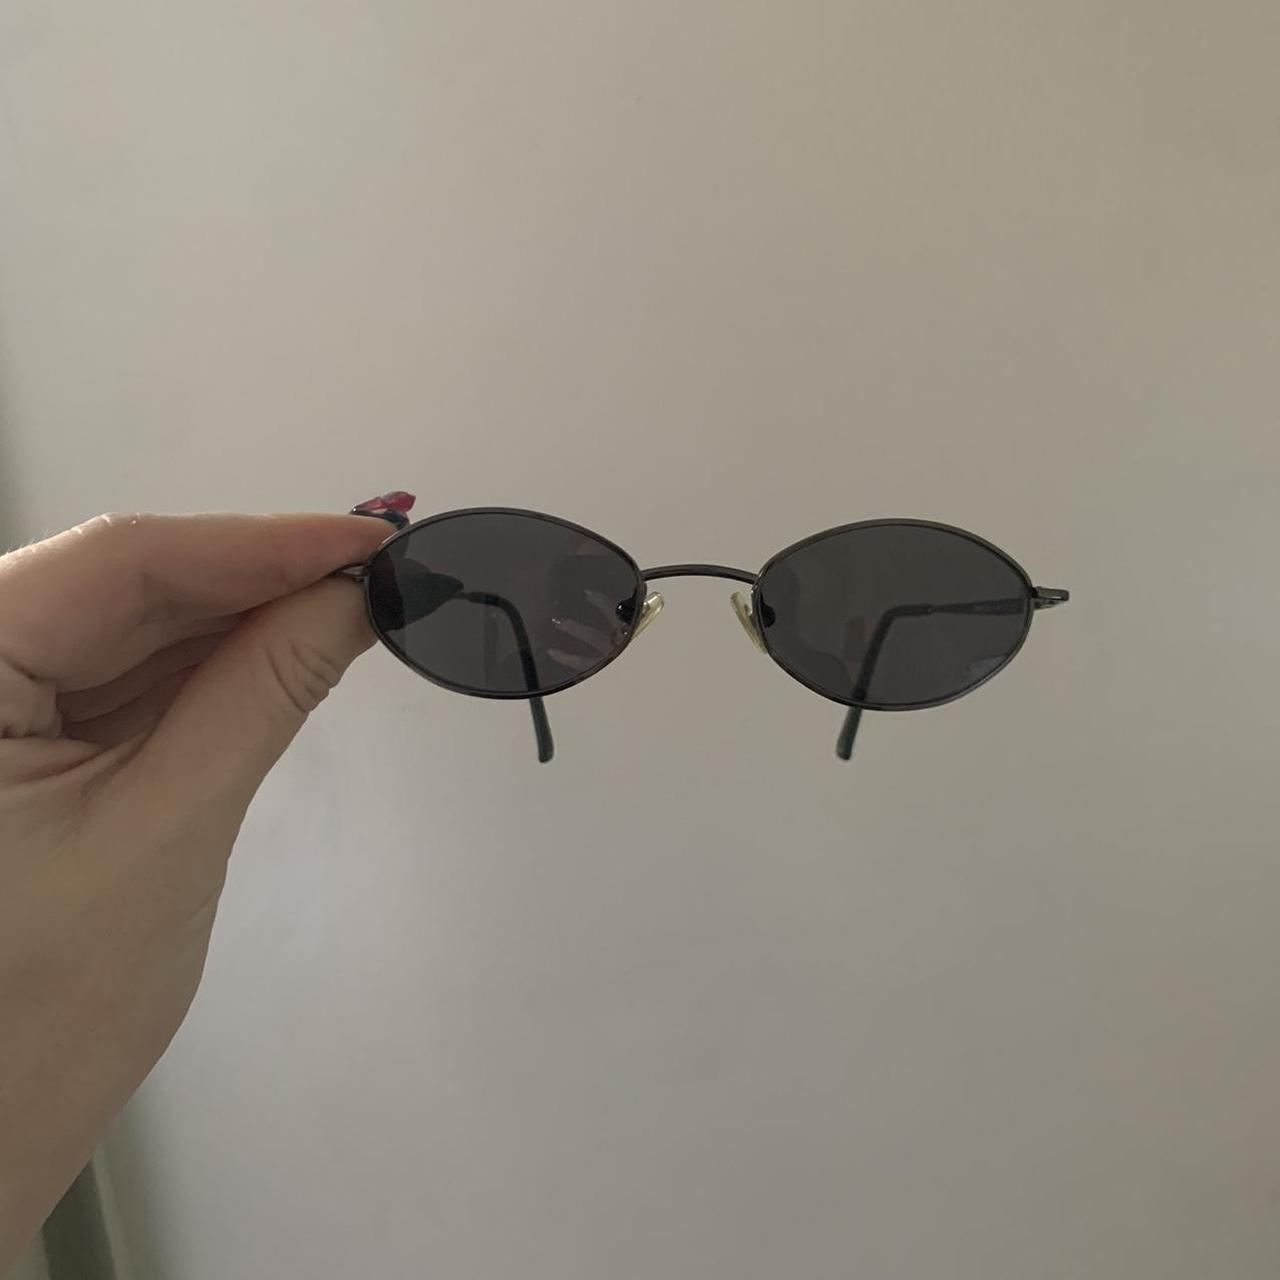 DKNY Women's Black and Grey Sunglasses (2)